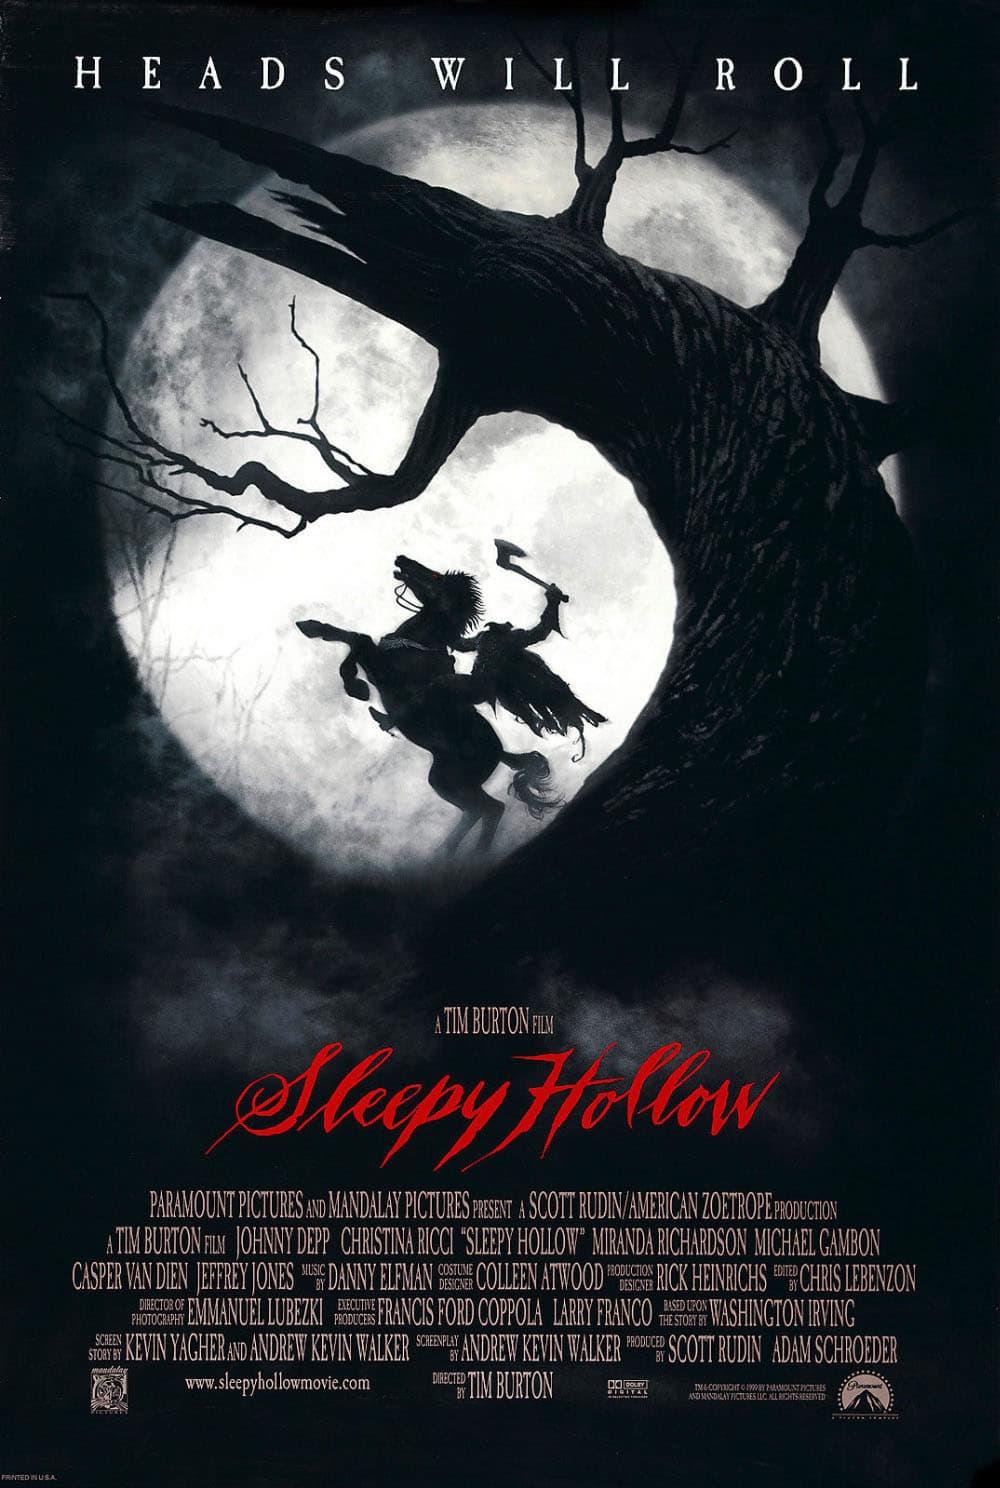 Legends of Sleepy Hollow poster